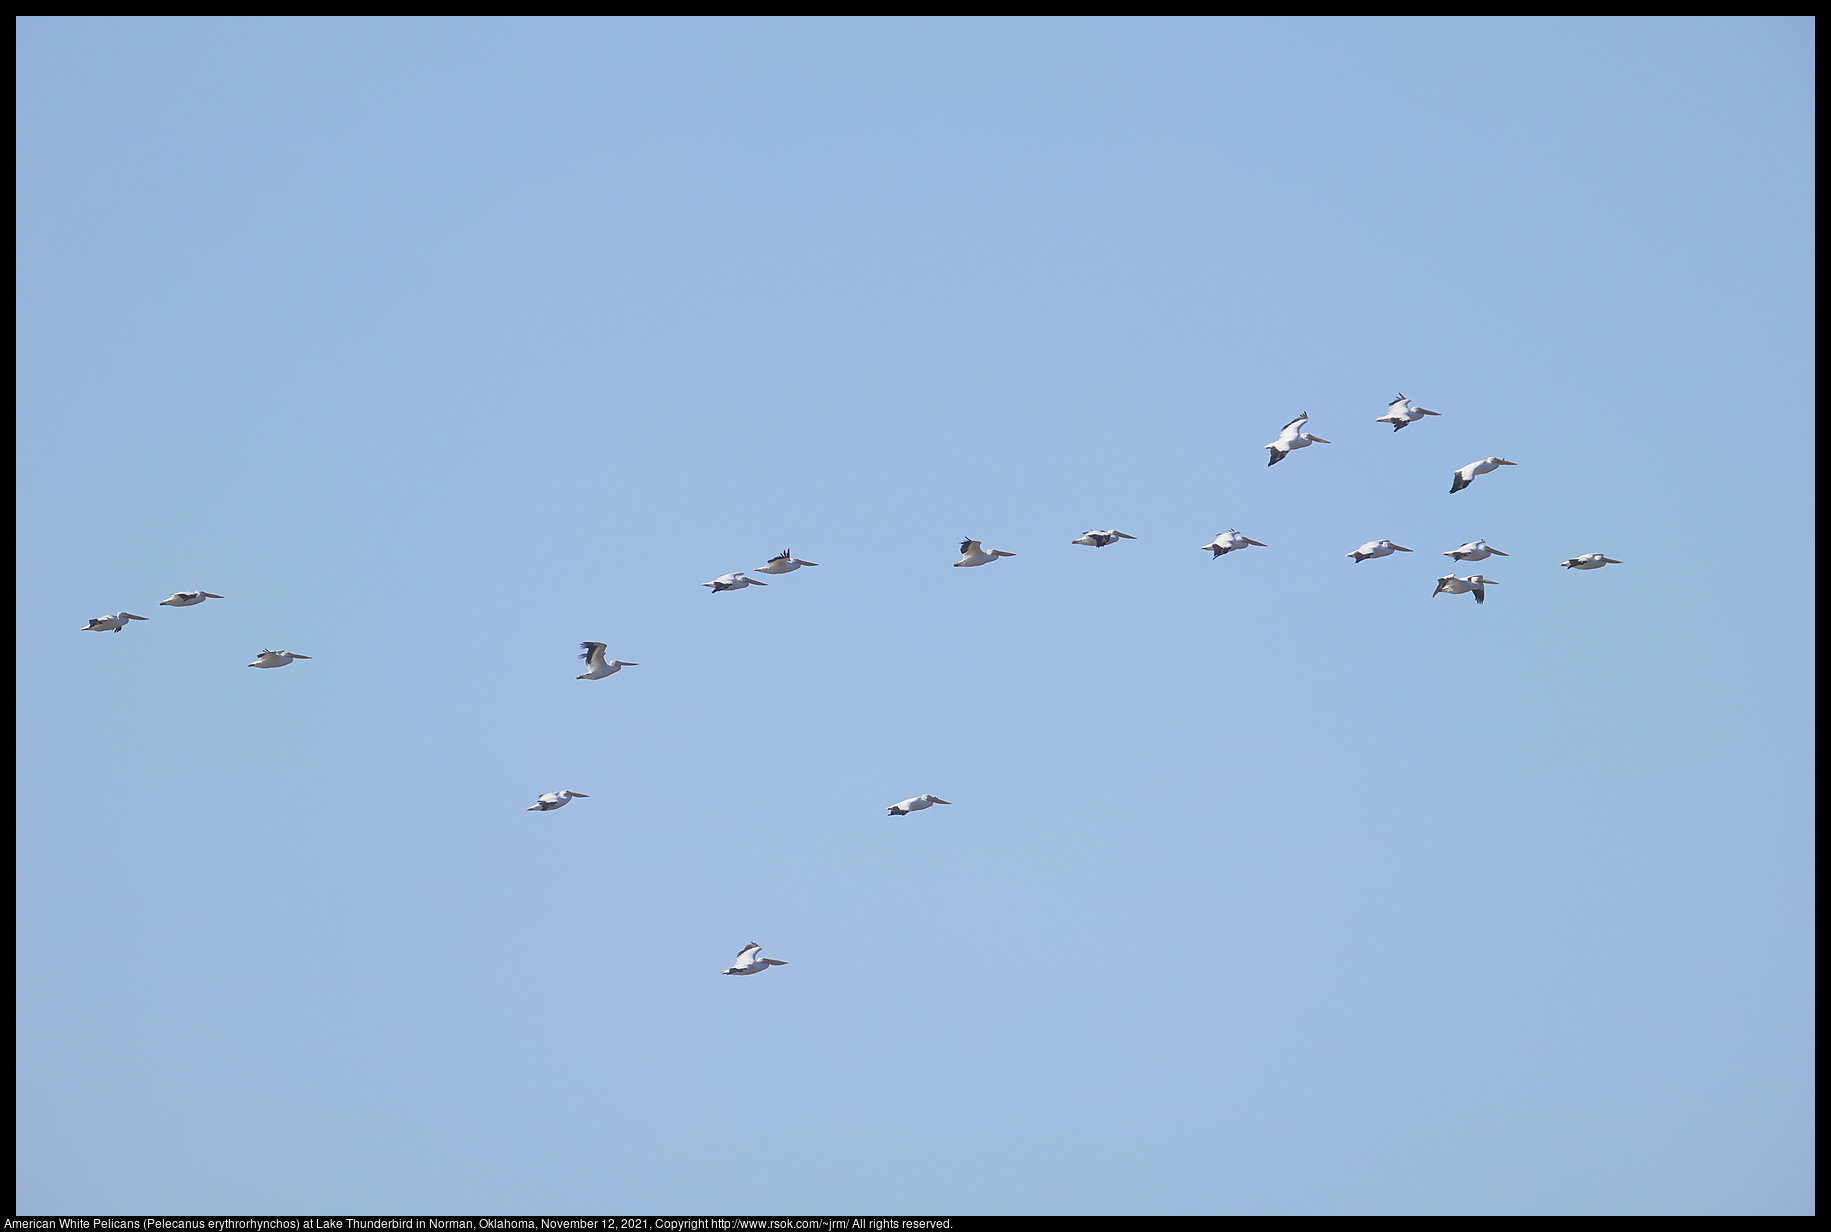 American White Pelicans (Pelecanus erythrorhynchos) at Lake Thunderbird in Norman, Oklahoma, November 12, 2021